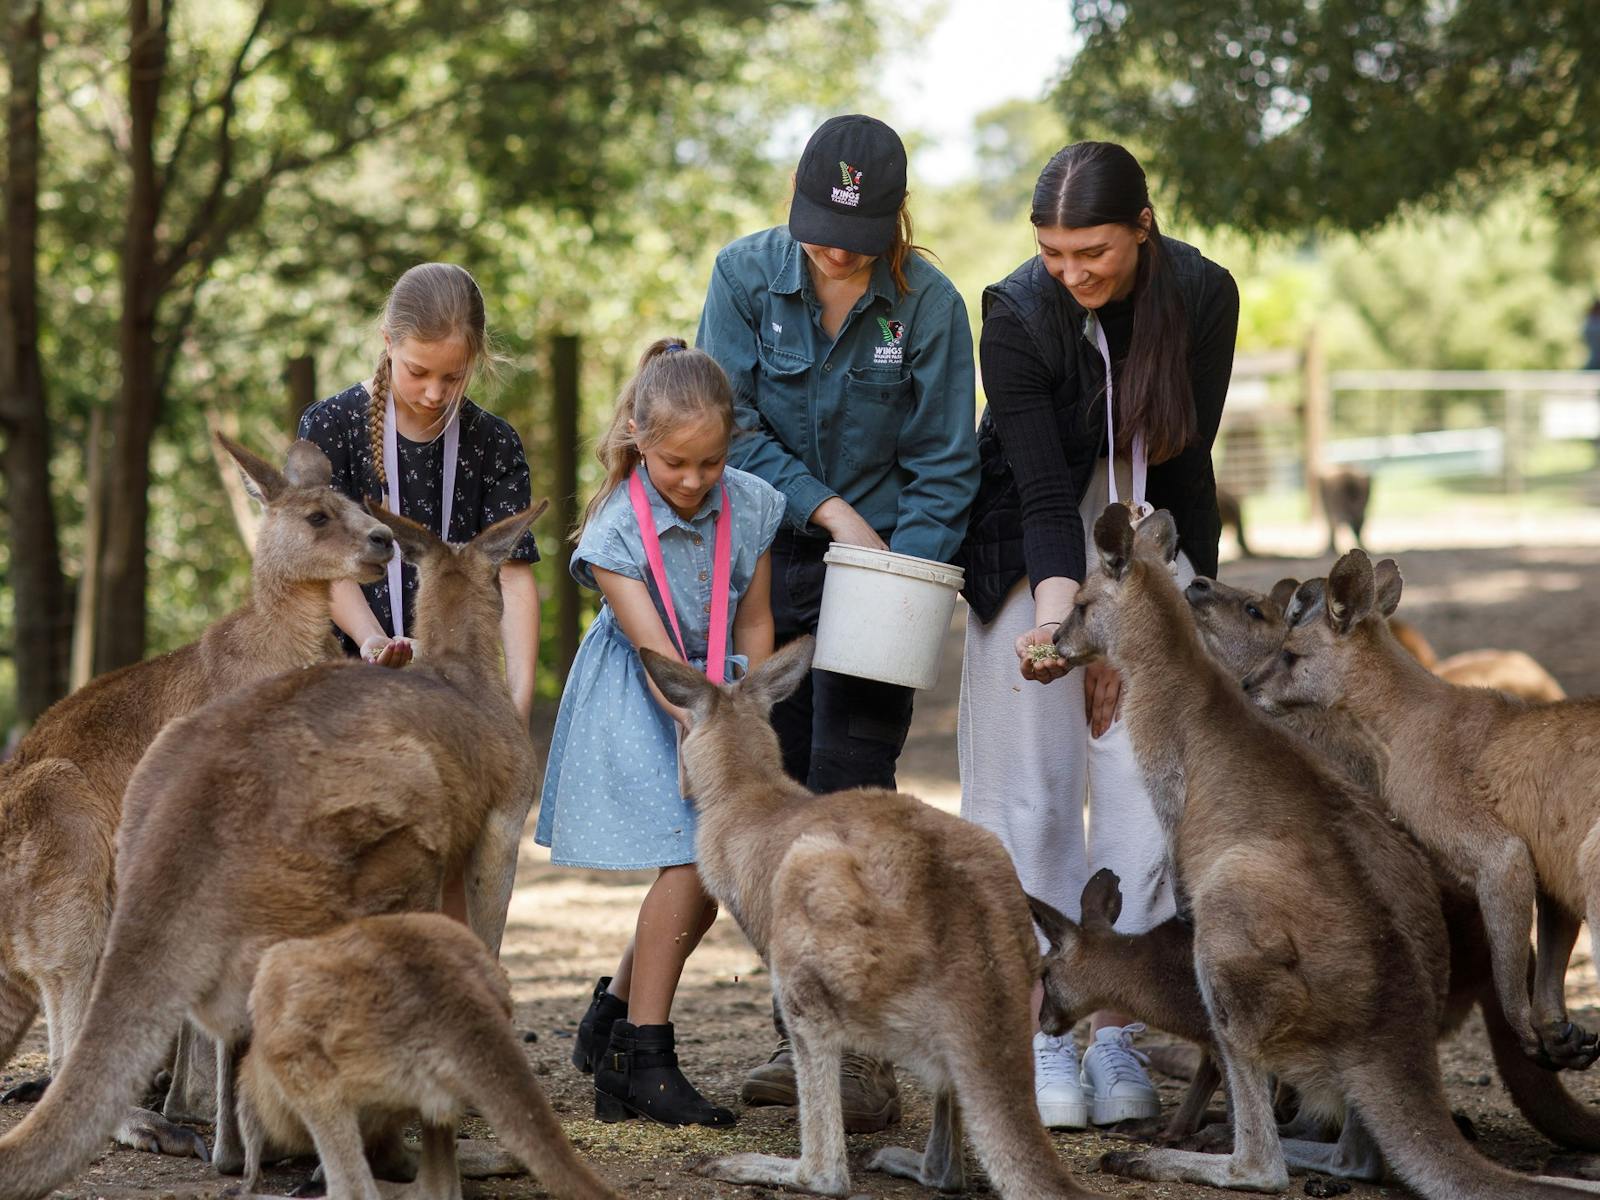 Hand feed the kangaroos